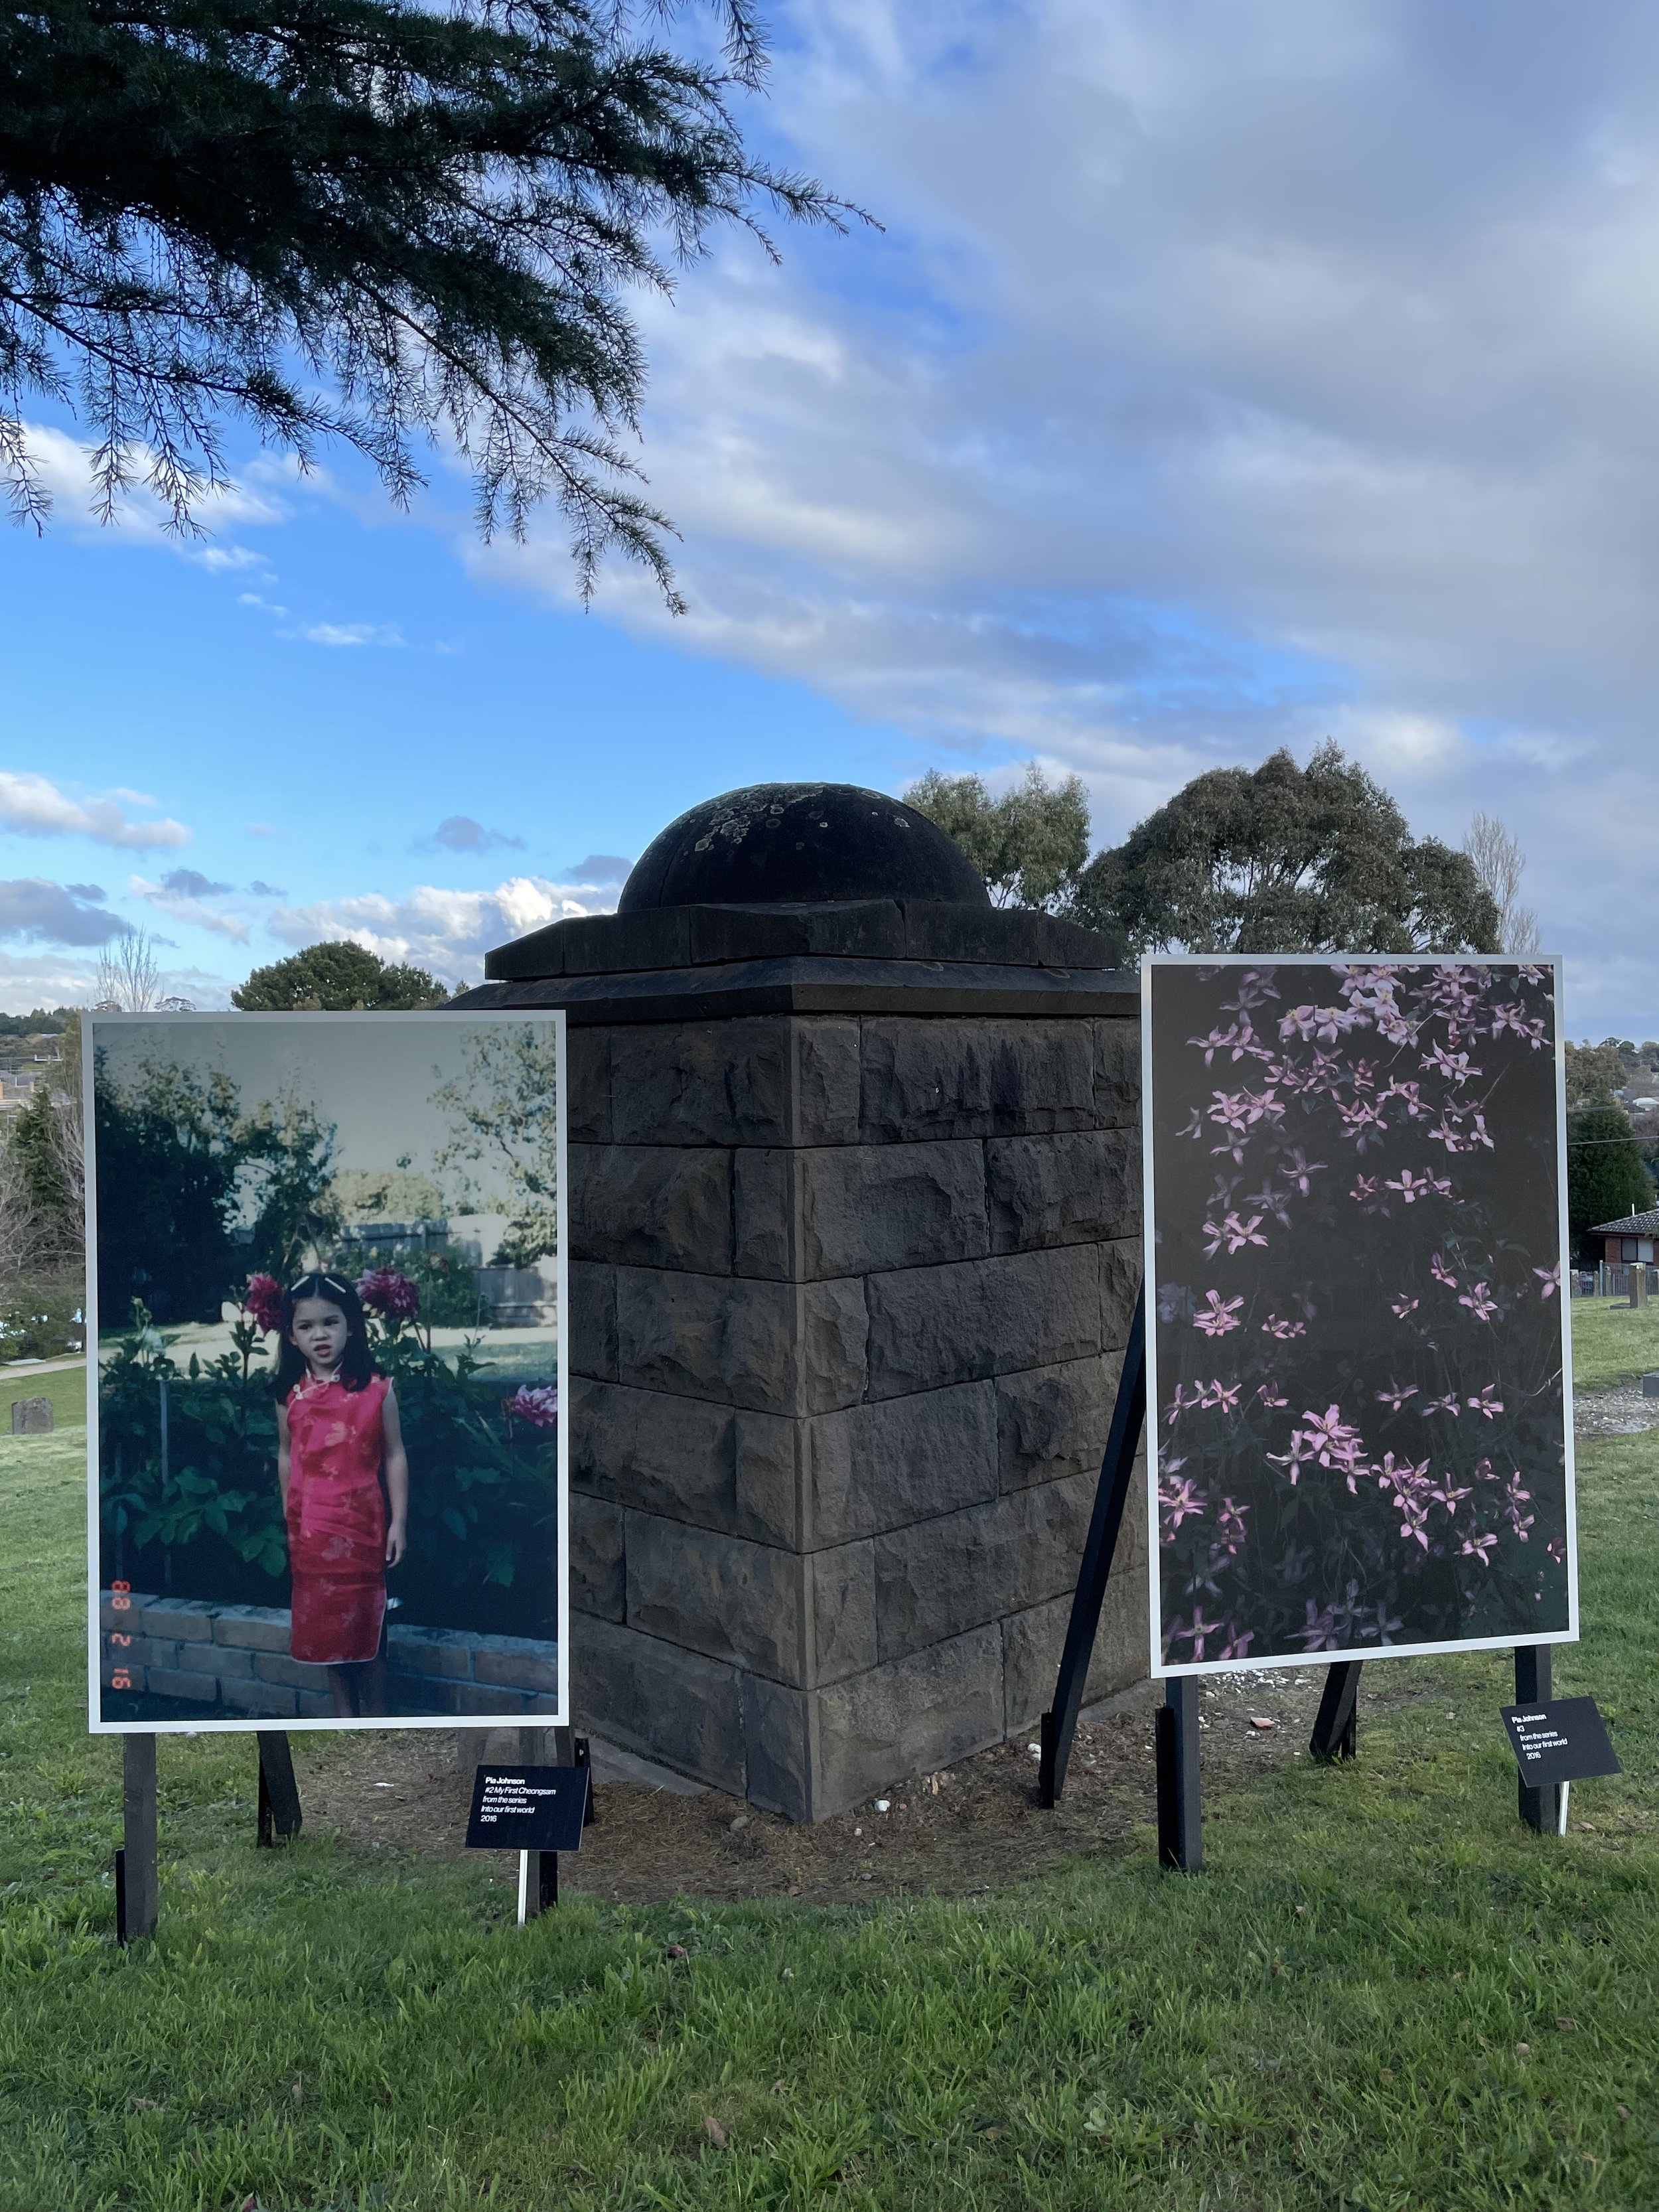  2021 Ballarat International Foto Biennale 'Say it With Flowers' Exhibition 